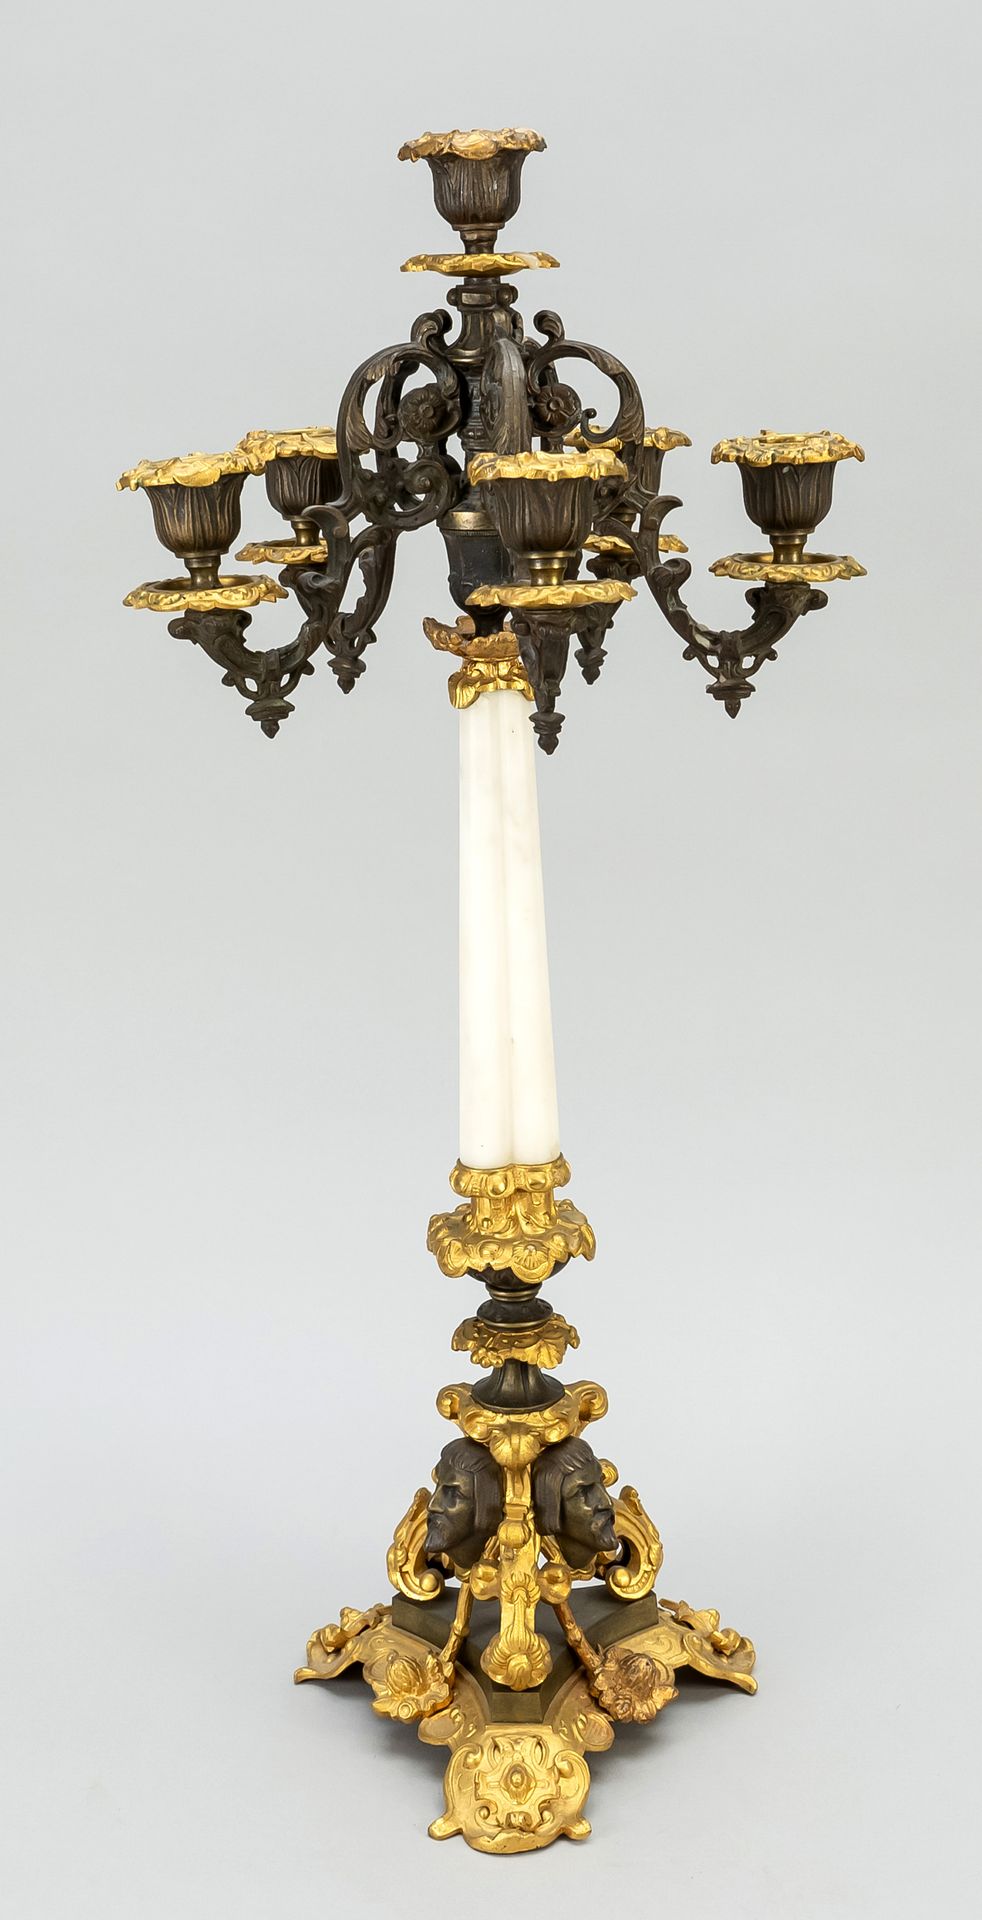 Null 历史主义吊灯，19世纪末，部分镀金的青铜和大理石。三通道装饰的底座上有骑士面具，上面是花瓶座。轴为三连杆柱束，共6灯，高56厘米。